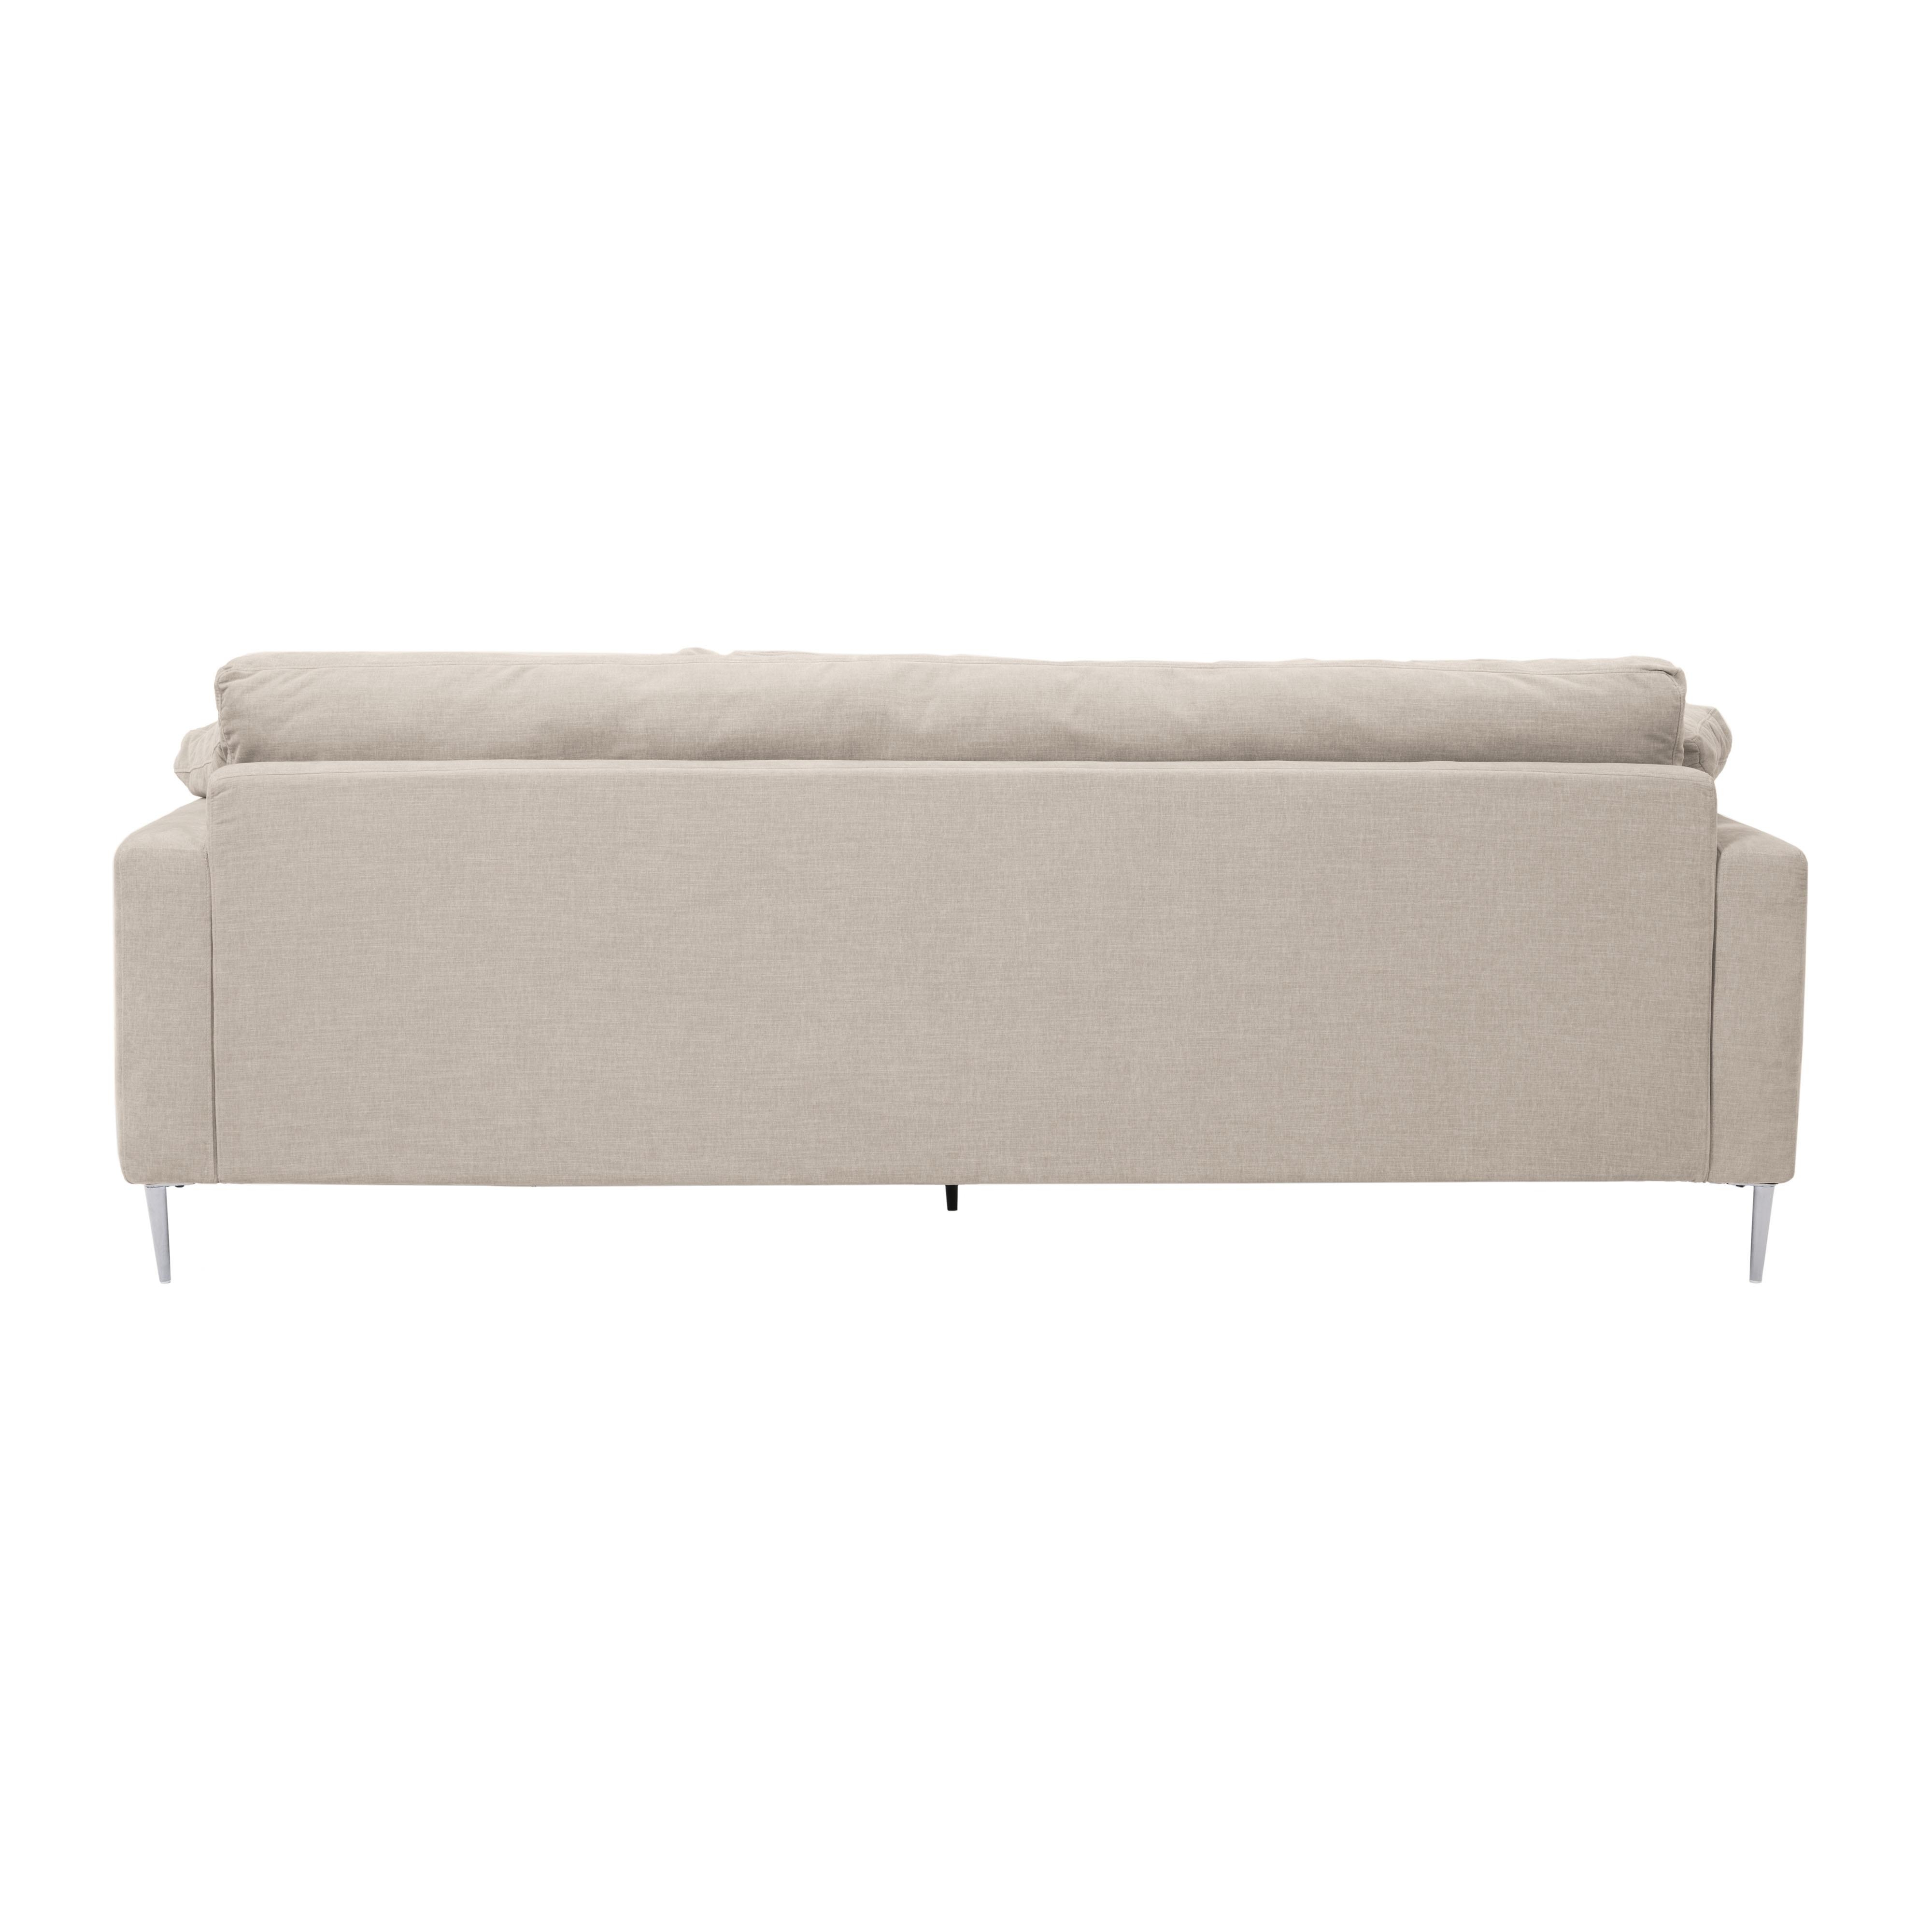 Vari Beige Textured Velvet Lounge Sofa - Image 3